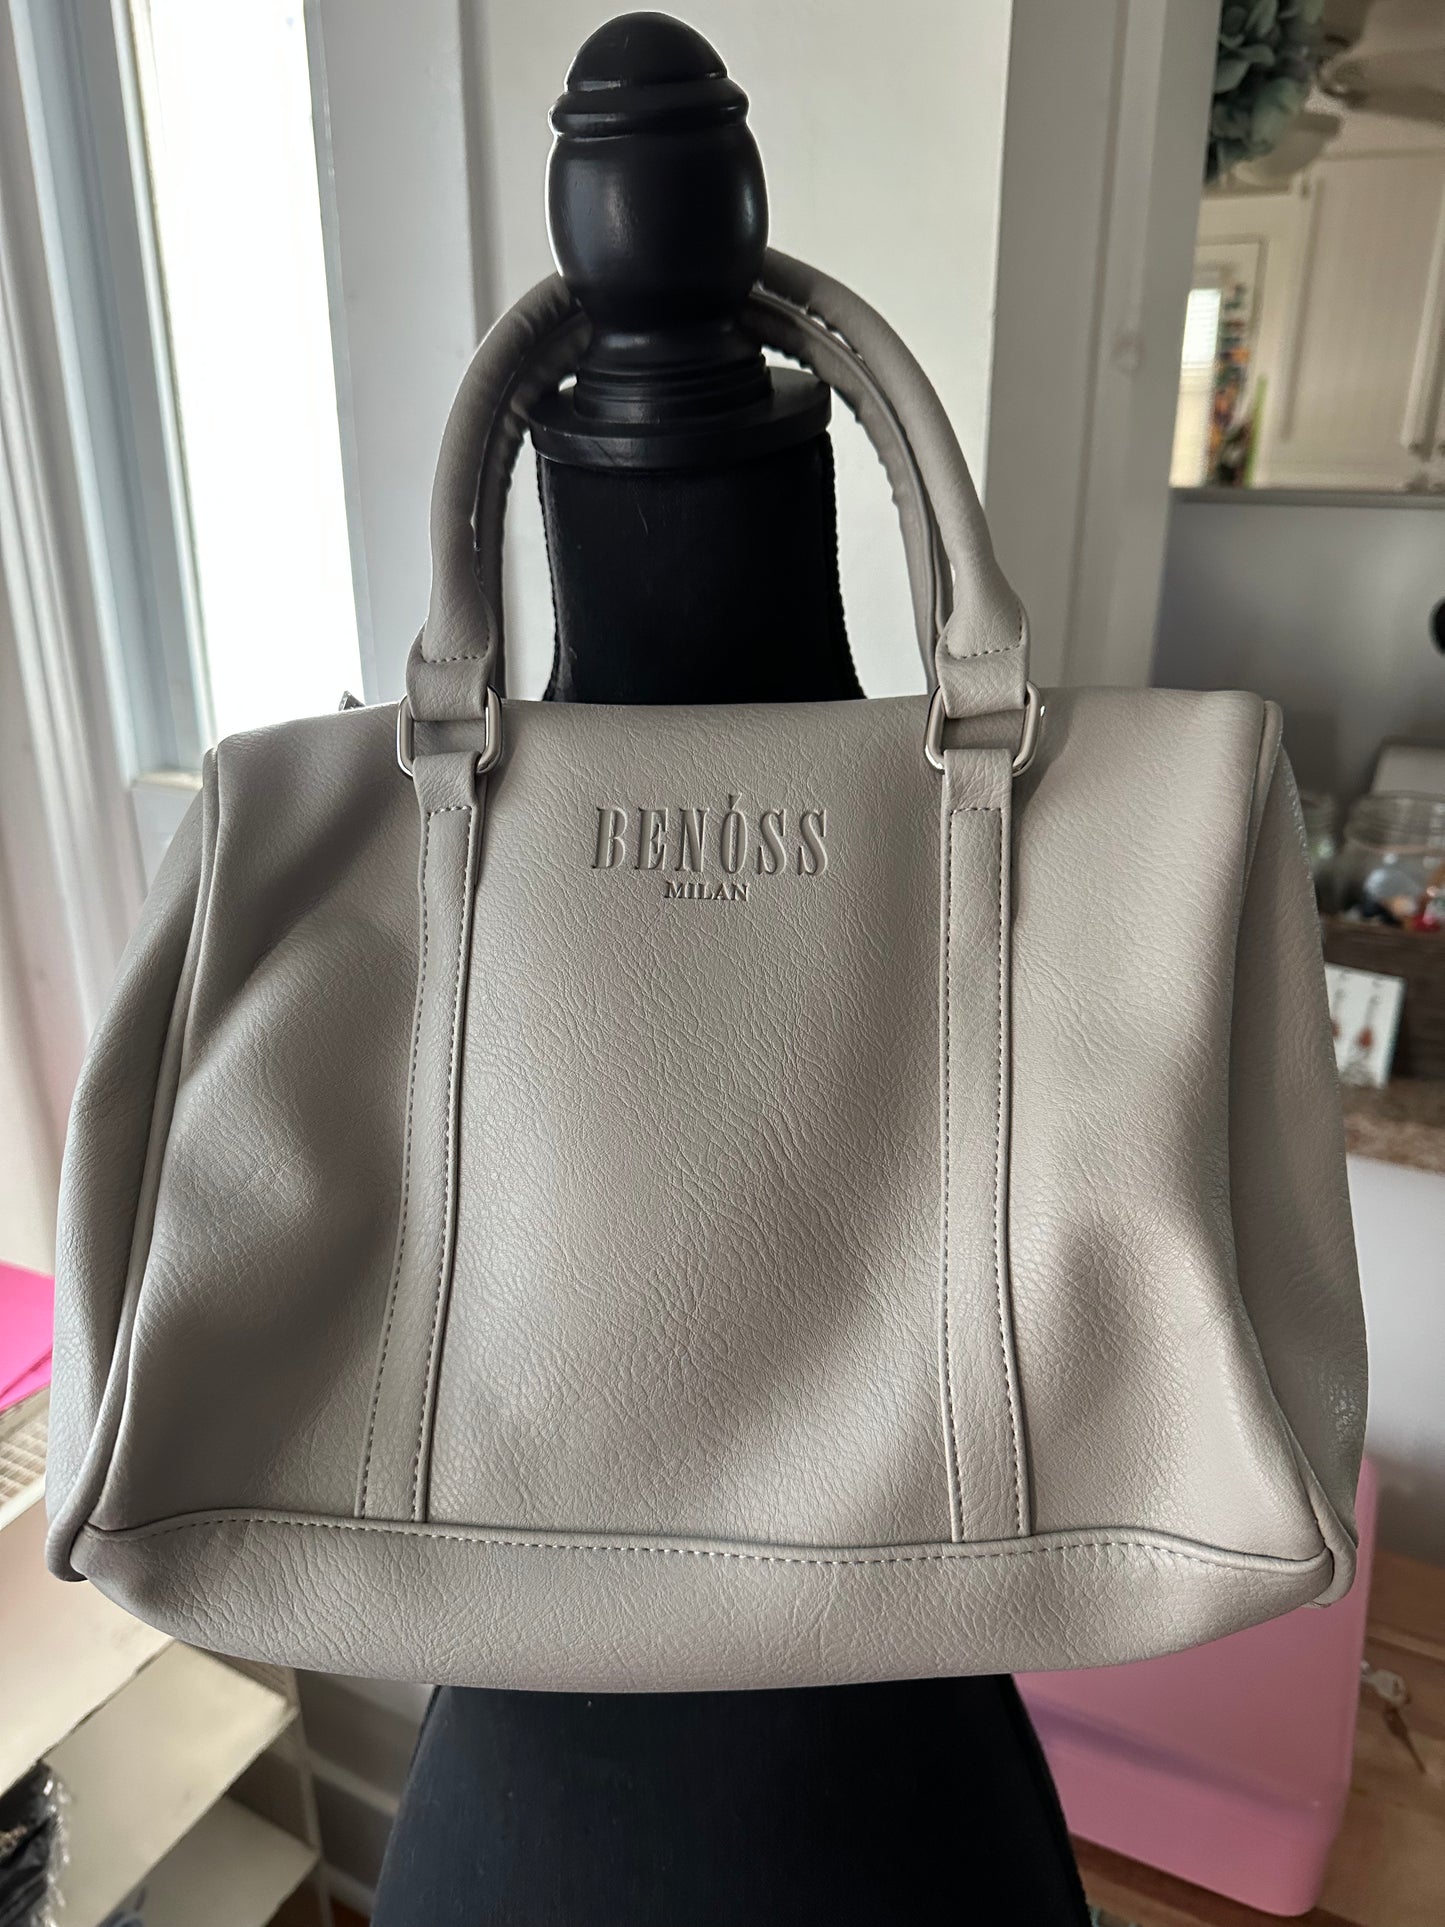 Benoss Milan Gray Bag